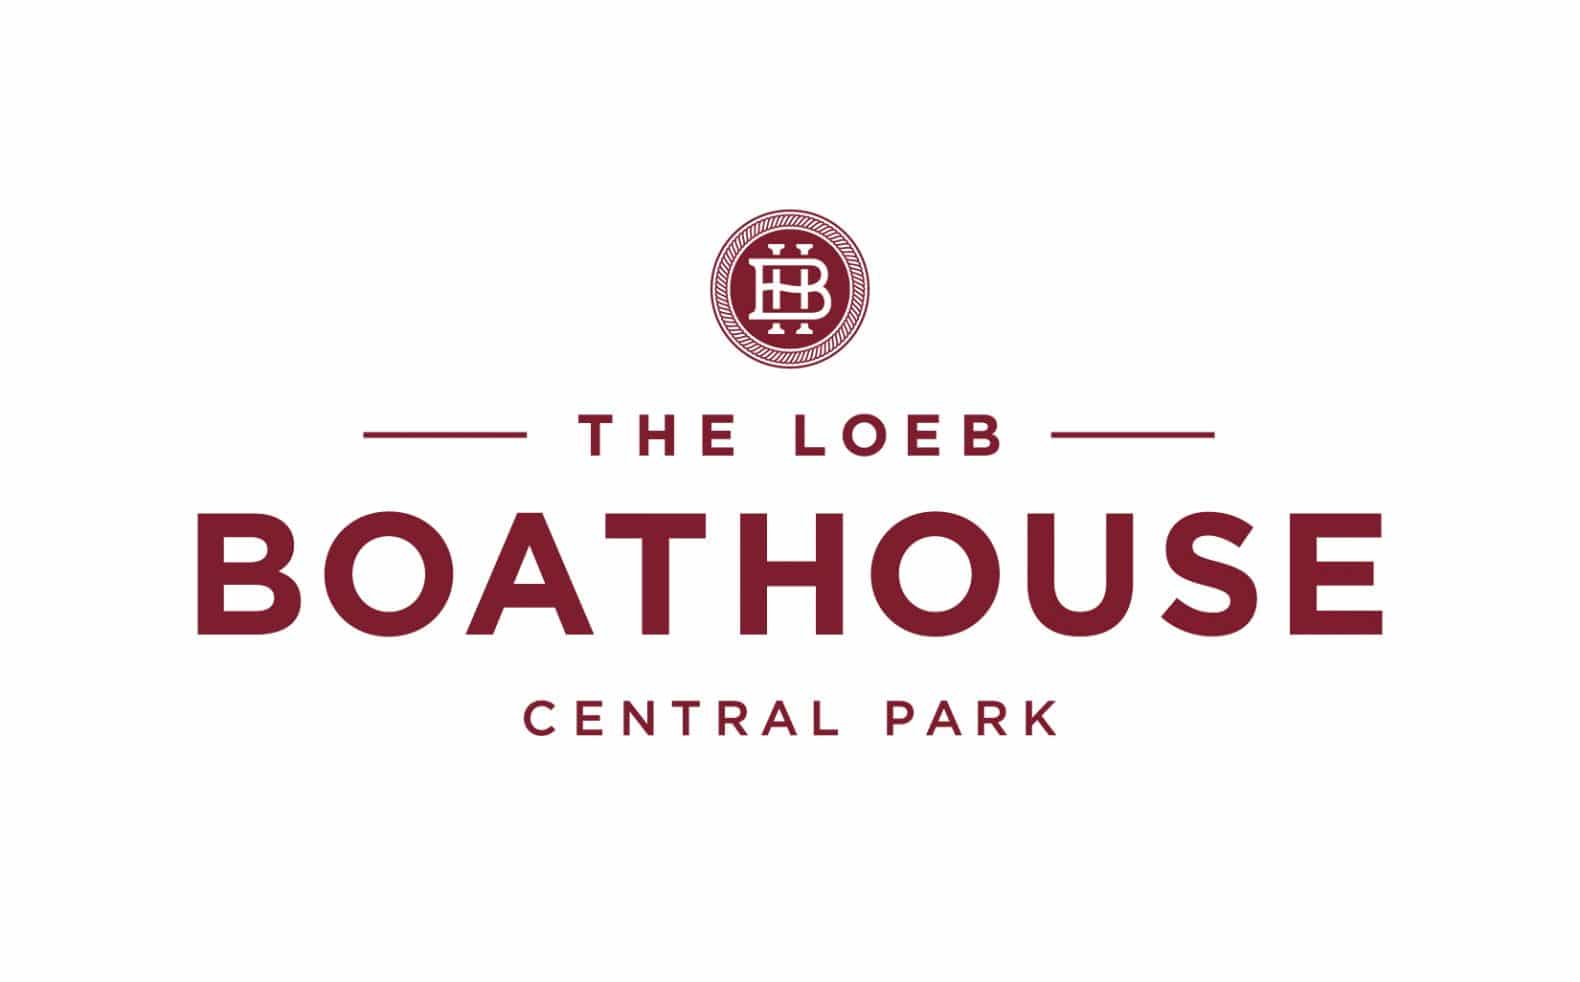 THE LOEB CENTRAL PARK BOATHOUSE